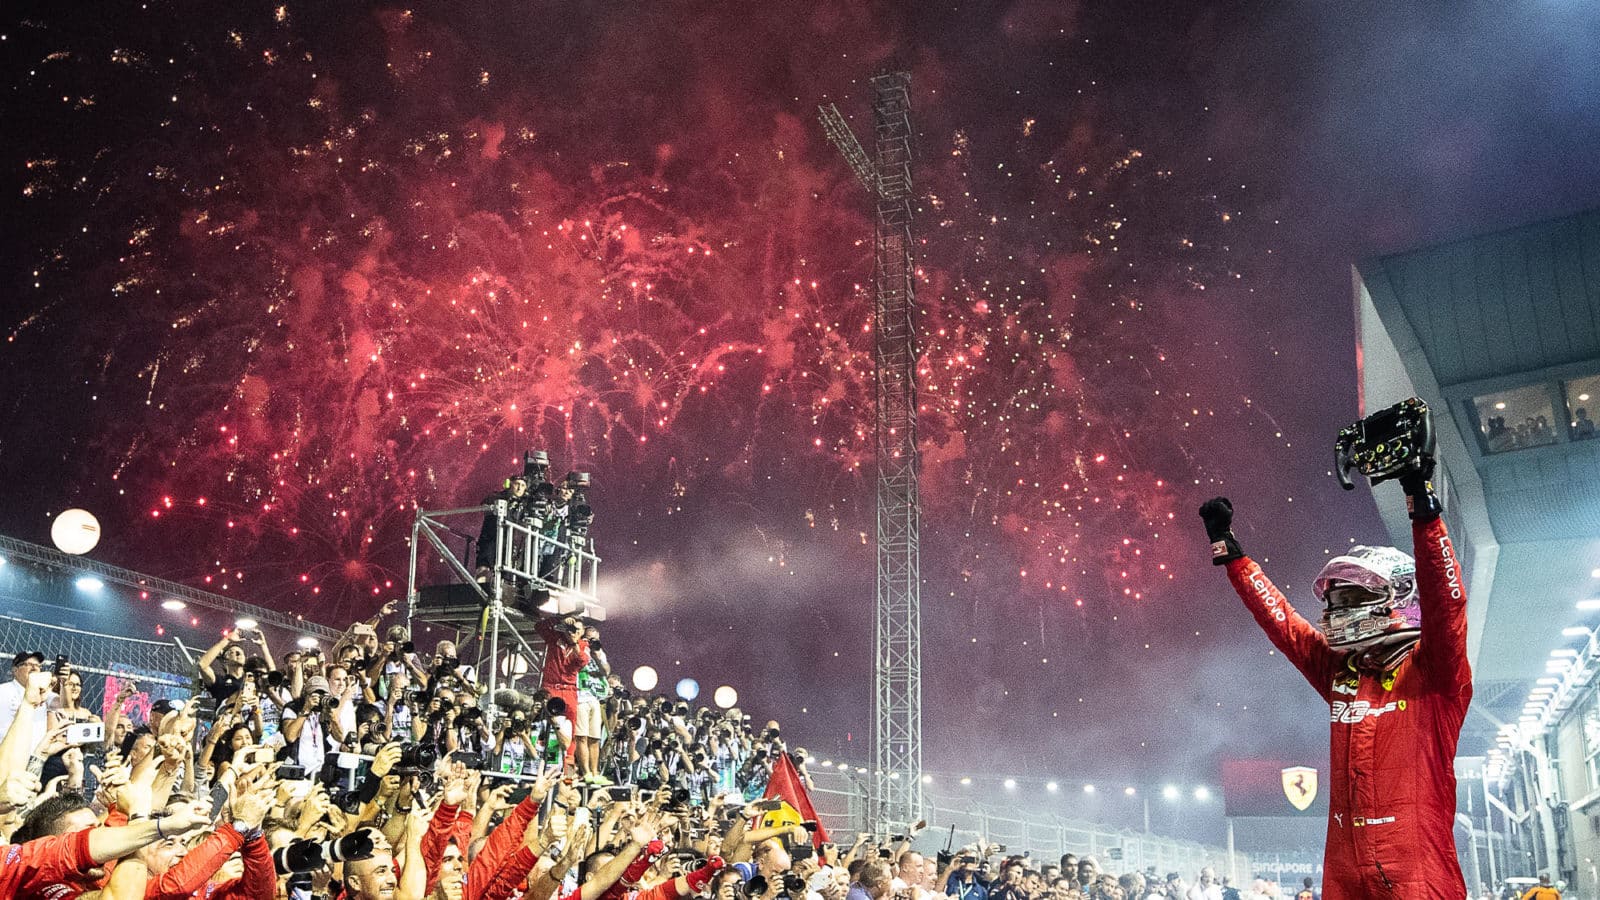 Sebastian Vettel celebrates victory in the 2019 Singapore GP with fireworks